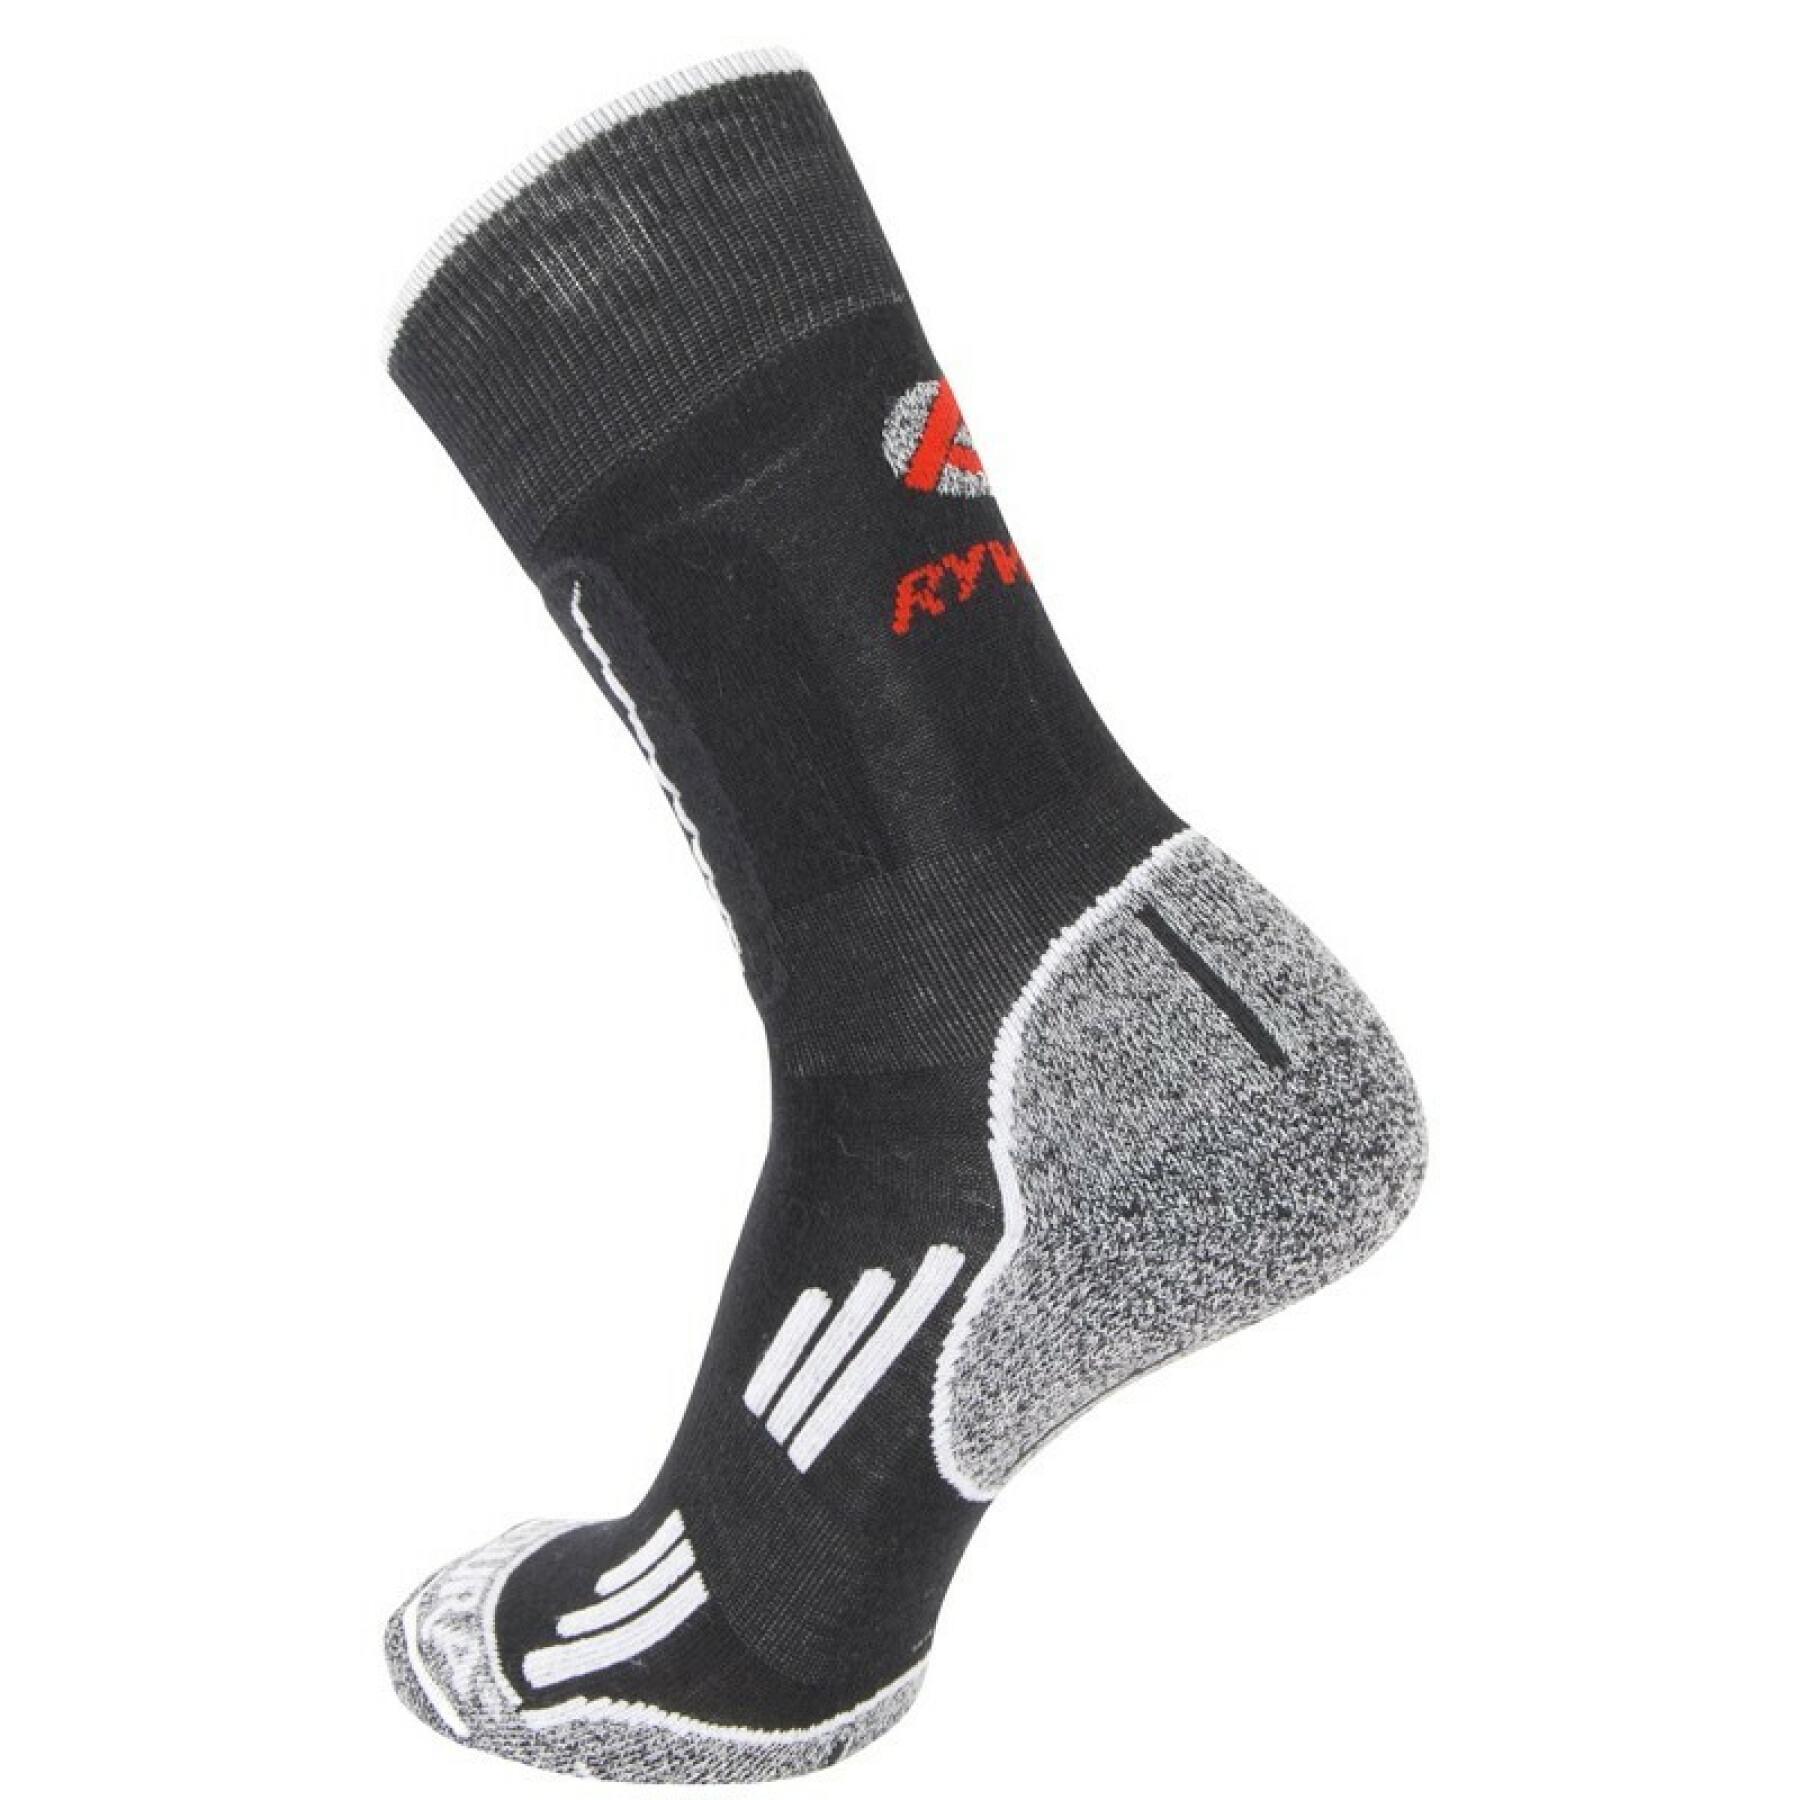 Merino socks Rywan No Limit